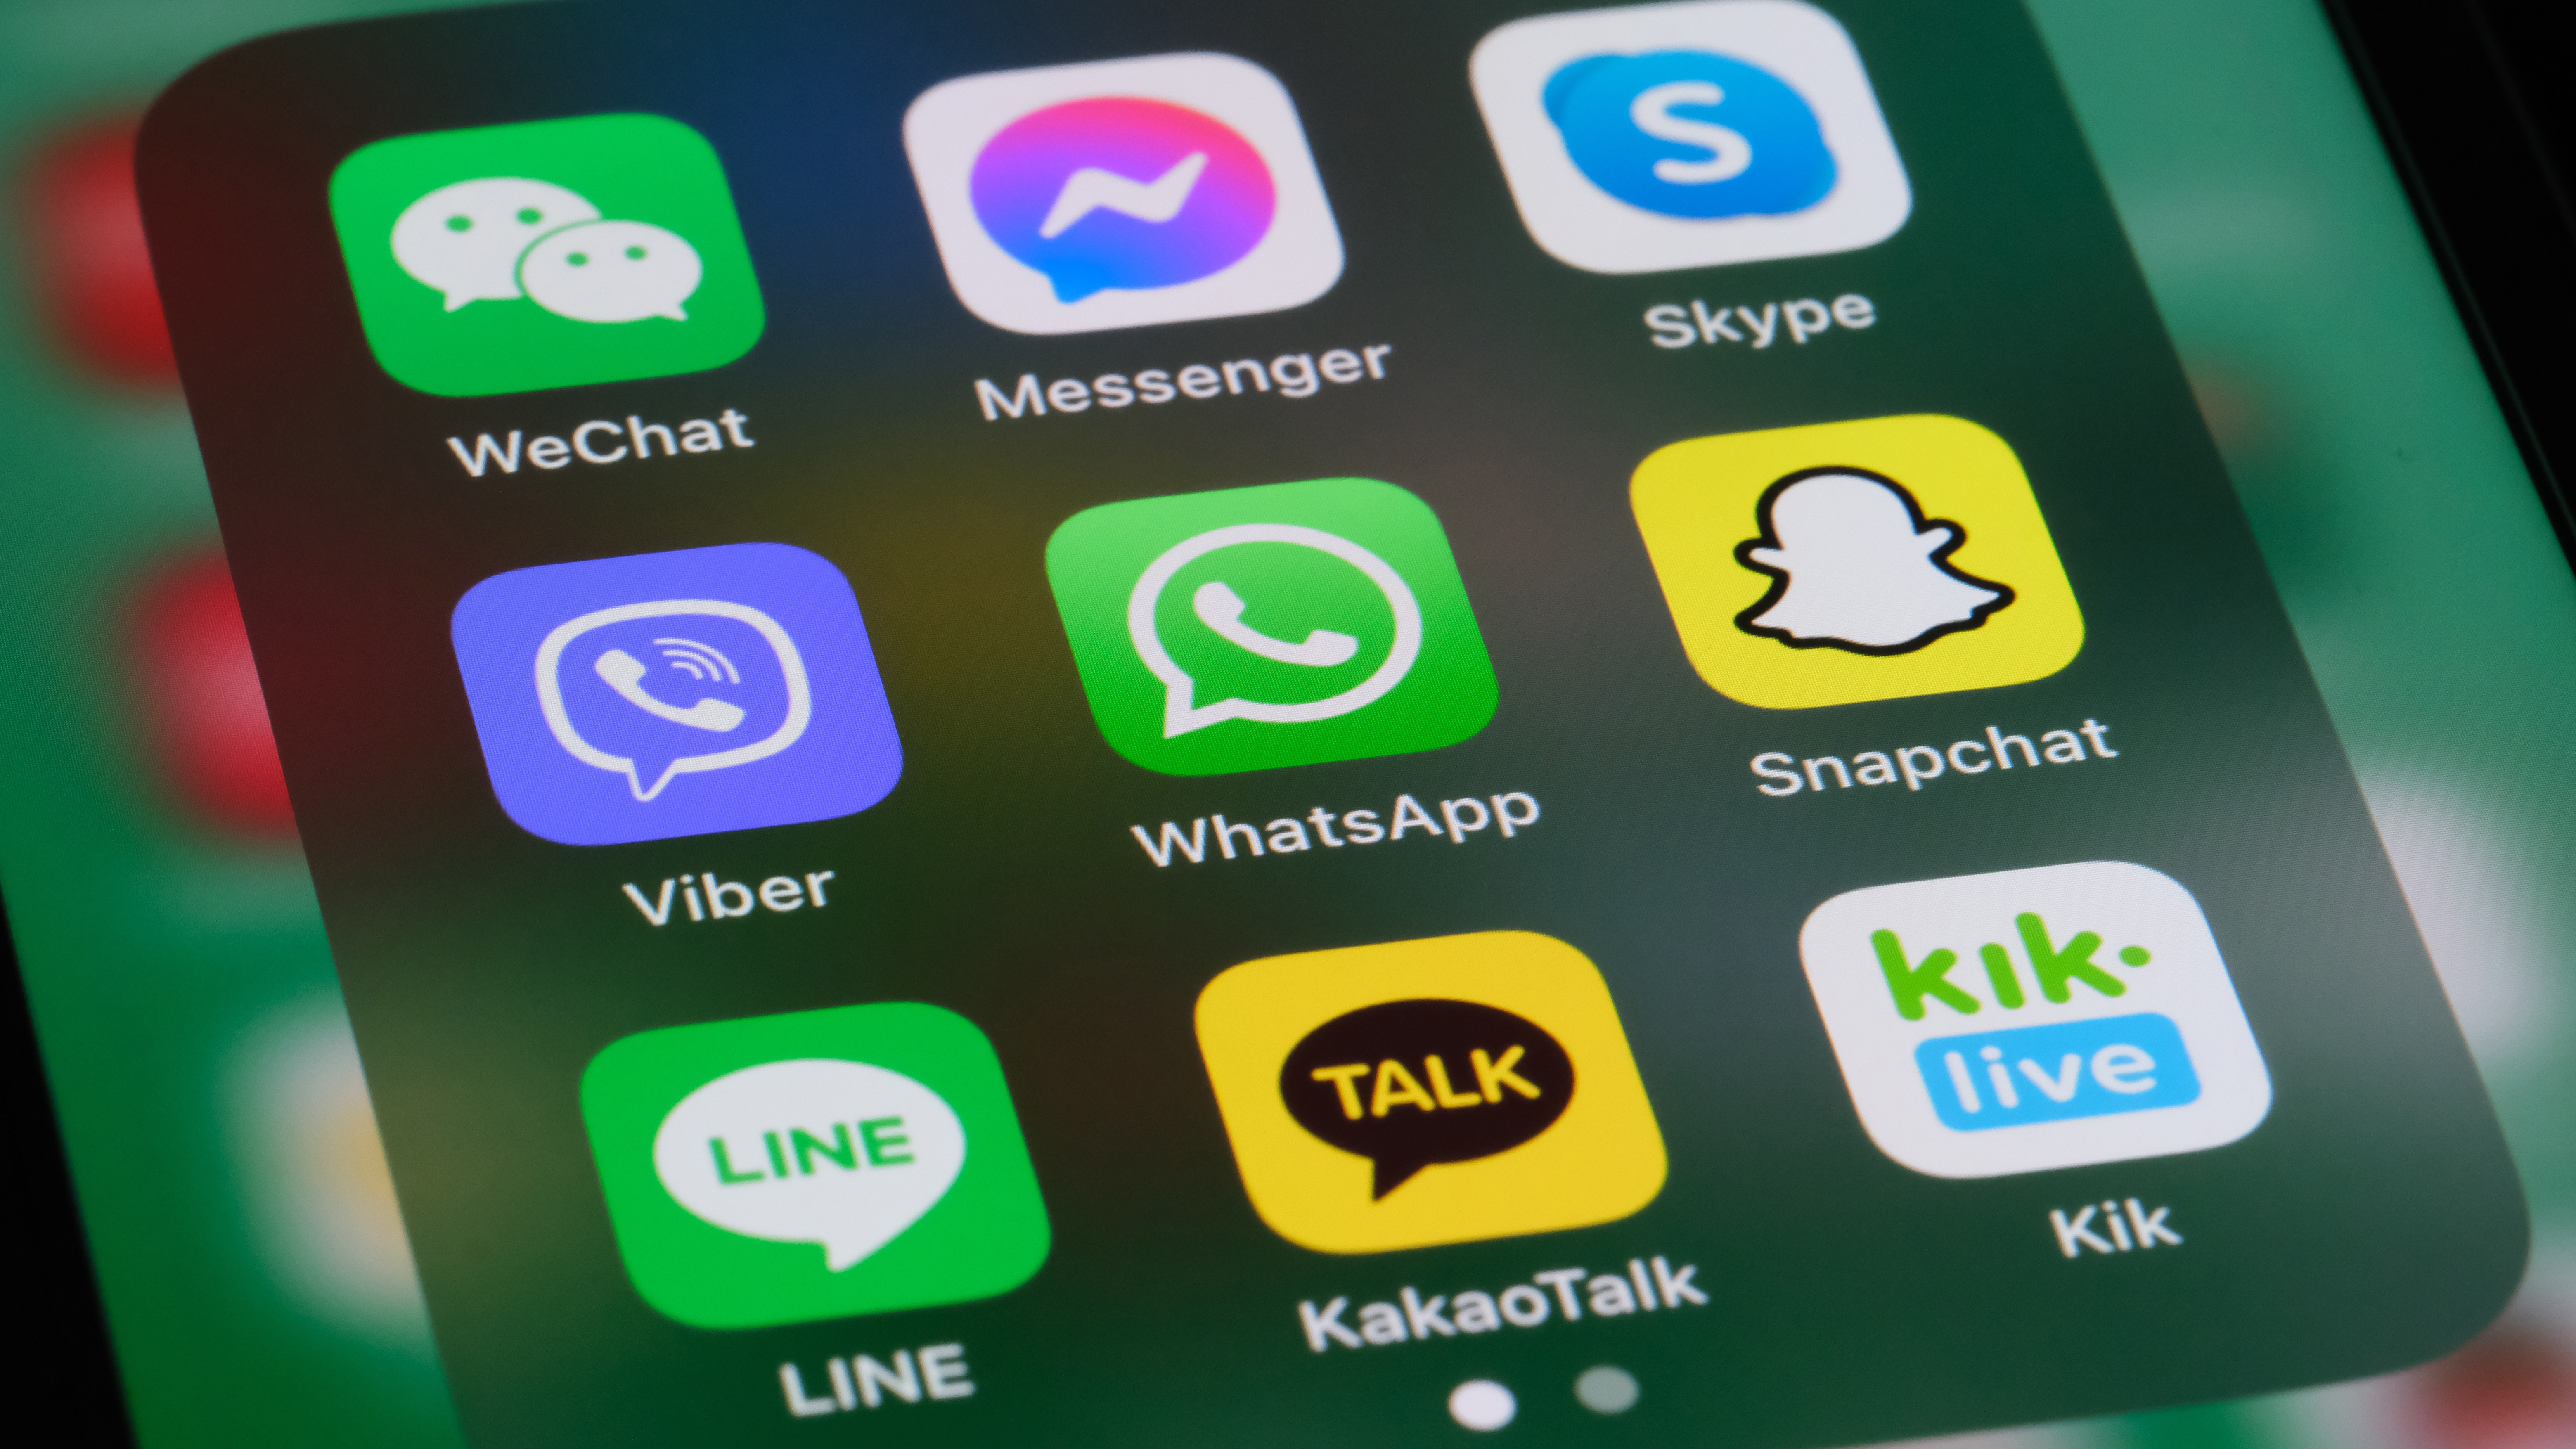 WhatsApp、LINE、Viber、WeChat、KaKaoTalk、メッセンジャー、Skype、Snapchat、Kik メッセンジャー アプリのアイコンが画面に表示されます。 各種インスタントコミュニケーションソフトウェアアプリケーション